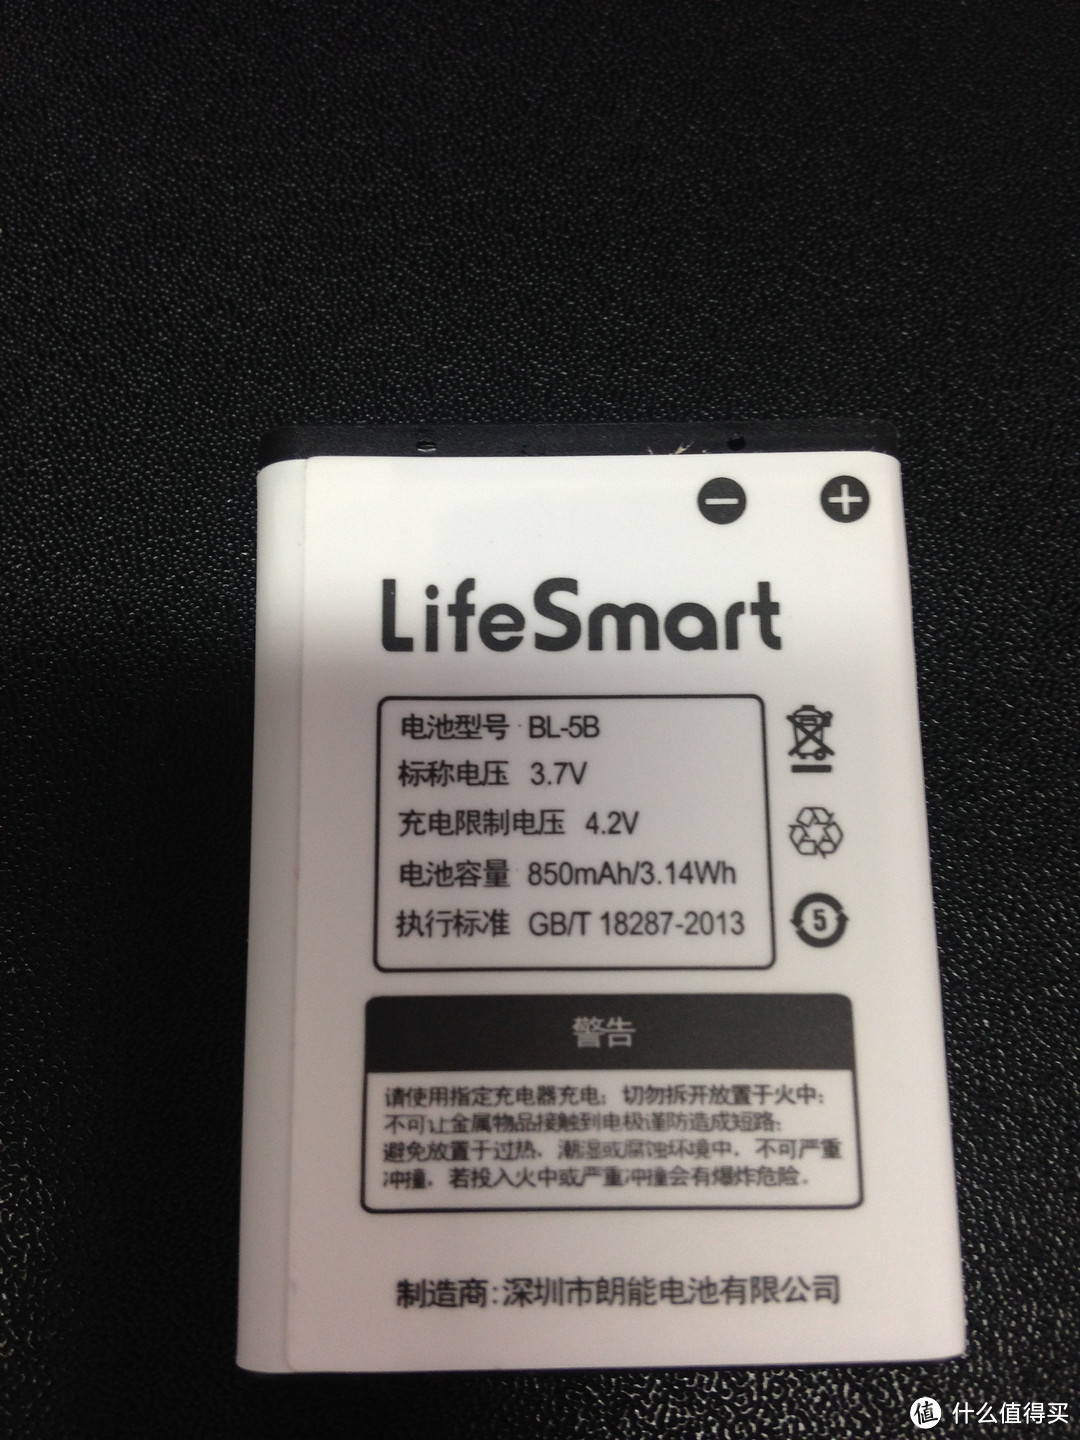 LifeSmart：家用安防系统也进入互联网时代了。一位老安防工作者的感叹。